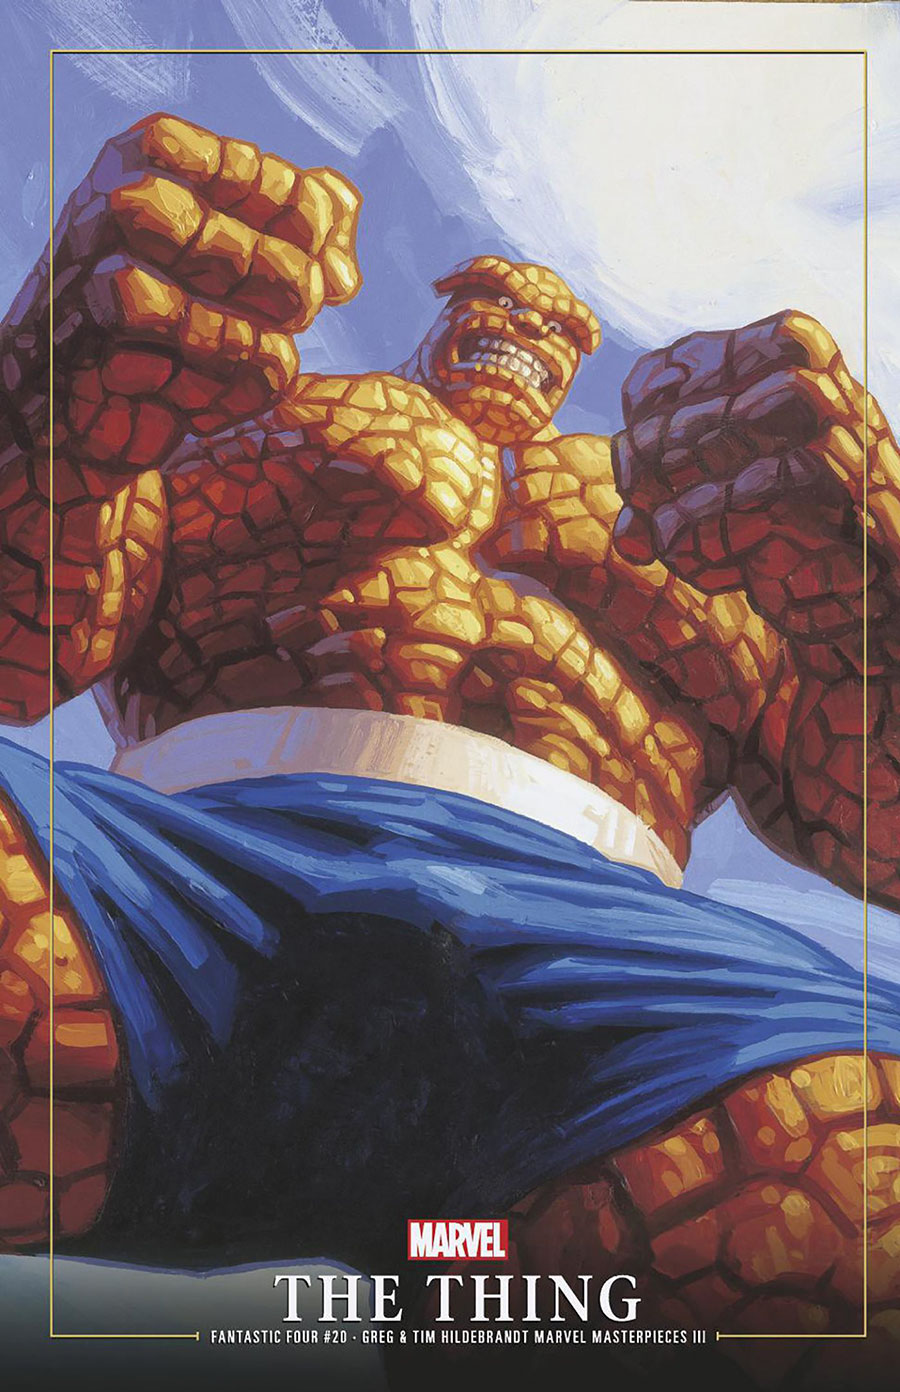 Fantastic Four Vol 7 #20 Cover B Variant Greg Hildebrandt & Tim Hildebrandt Marvel Masterpieces III The Thing Cover